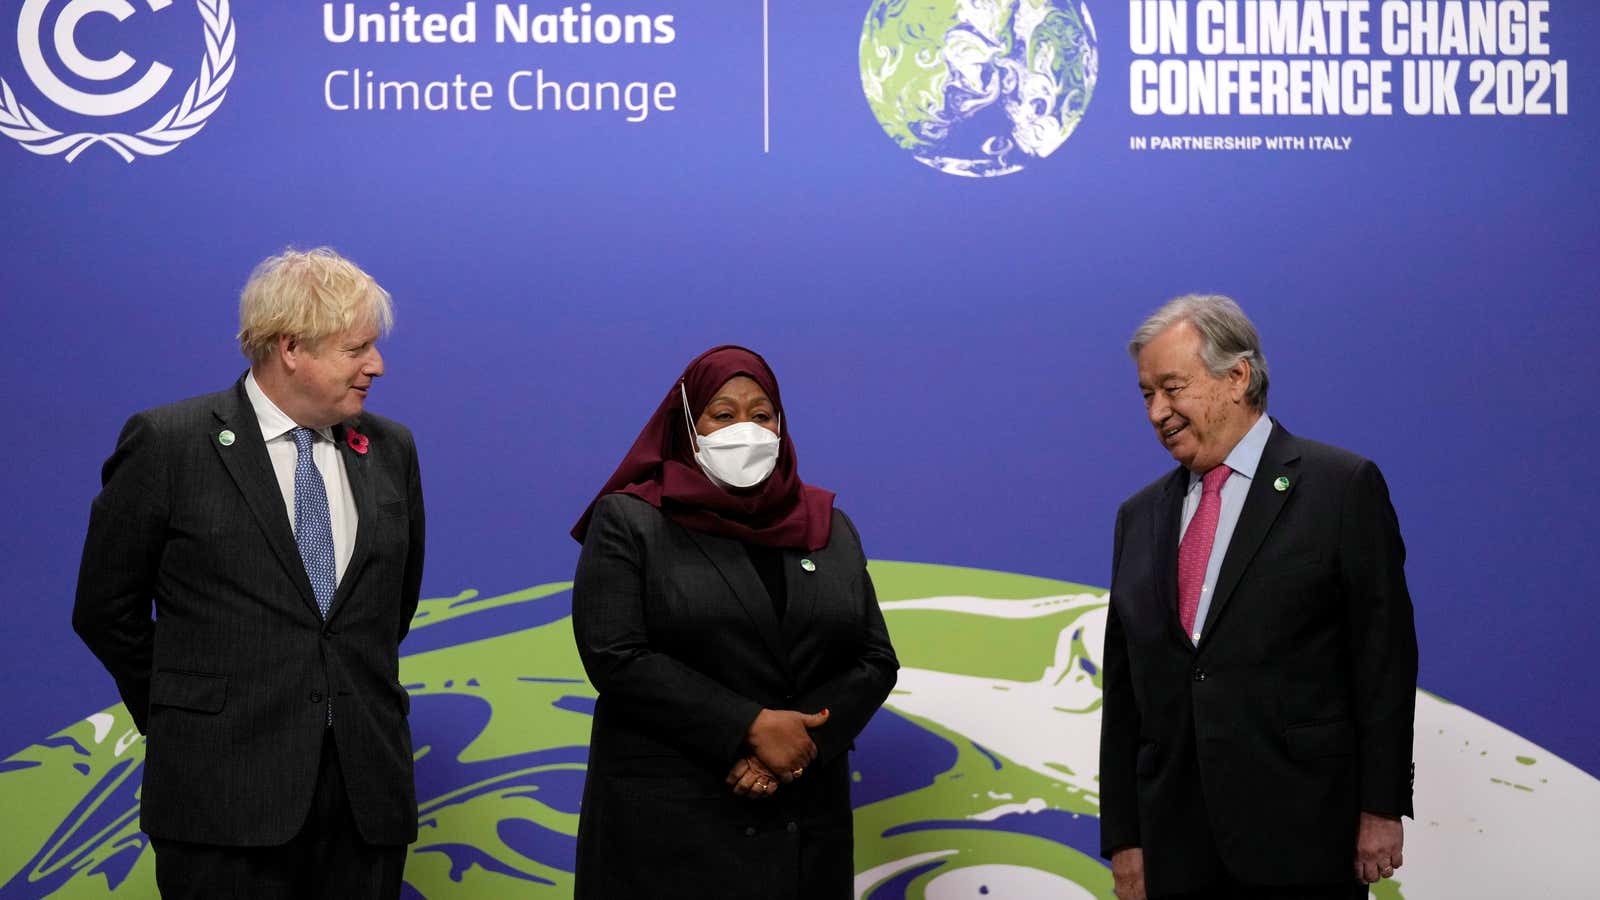 British Prime Minister Boris Johnson and United Nations Secretary General Antonio Guterres greet Tanzania’s President Samia Suluhu as she arrives for the UN Climate Change Conference (COP26) in Glasgow, Scotland, Britain